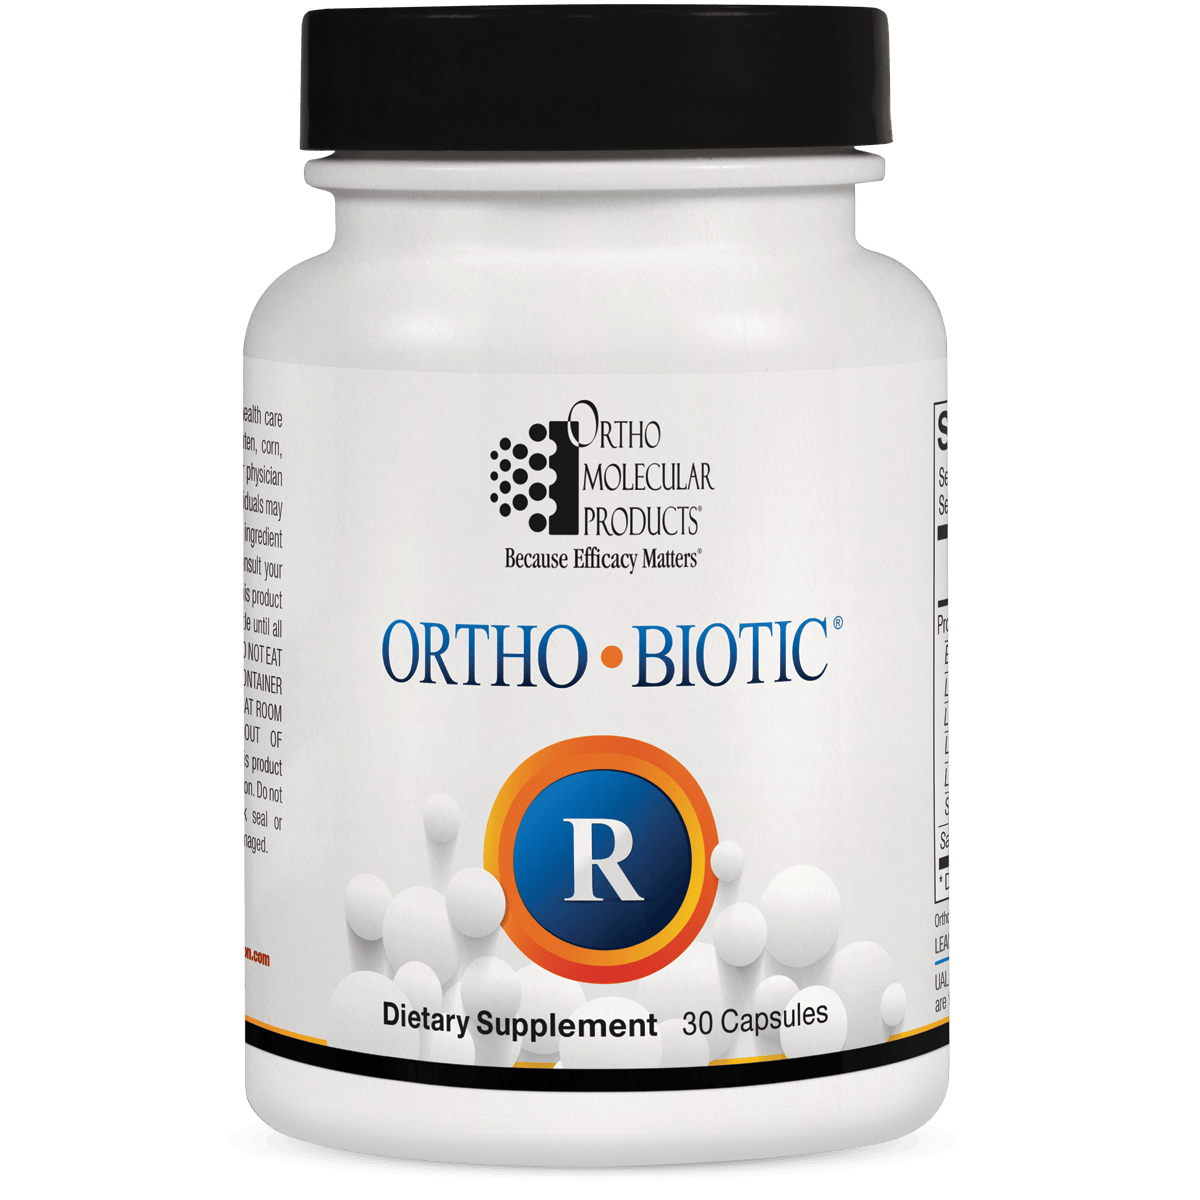 Ortho Biotic R product image